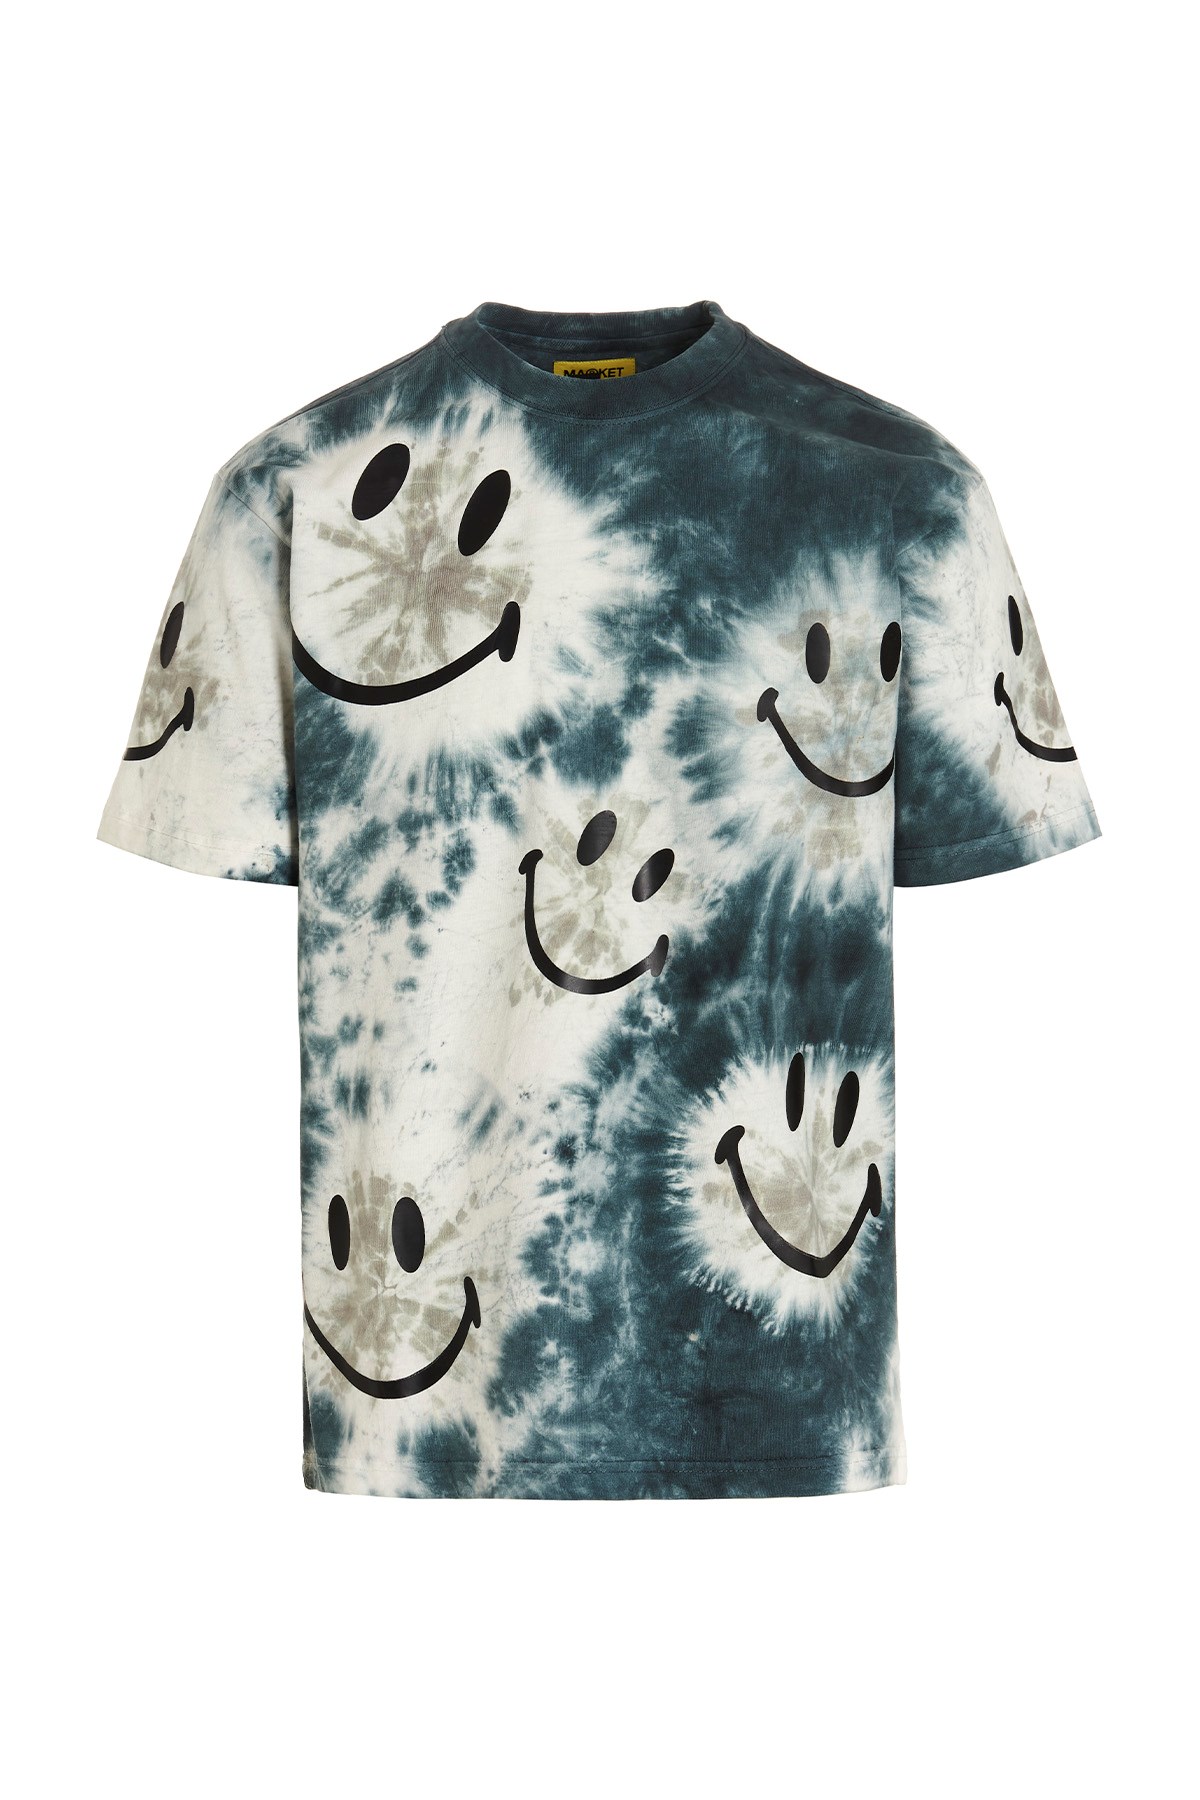 MARKET T-Shirt 'Smiley'